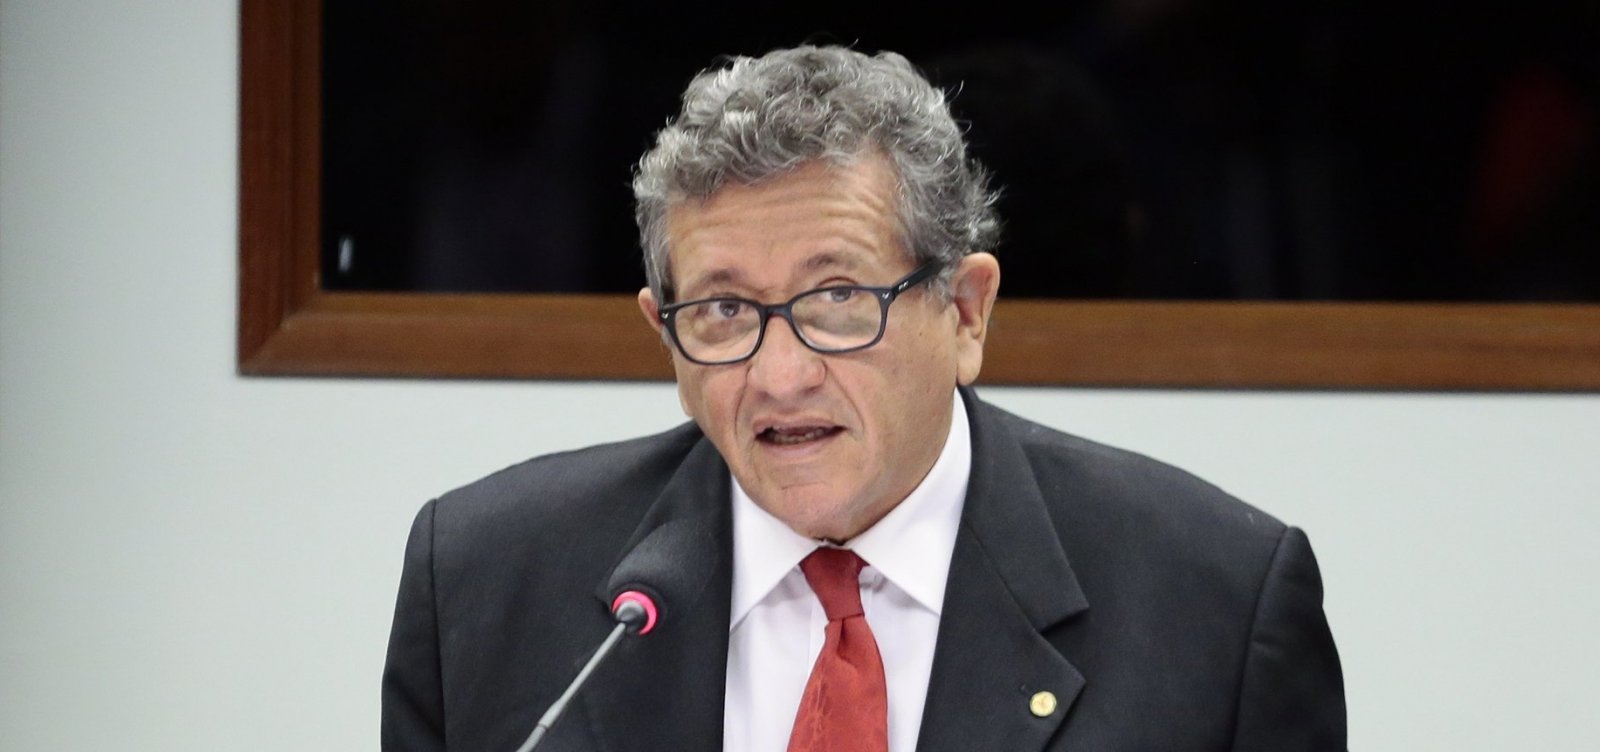 STJ torna Luiz Caetano inelegível pela Lei da Ficha Limpa